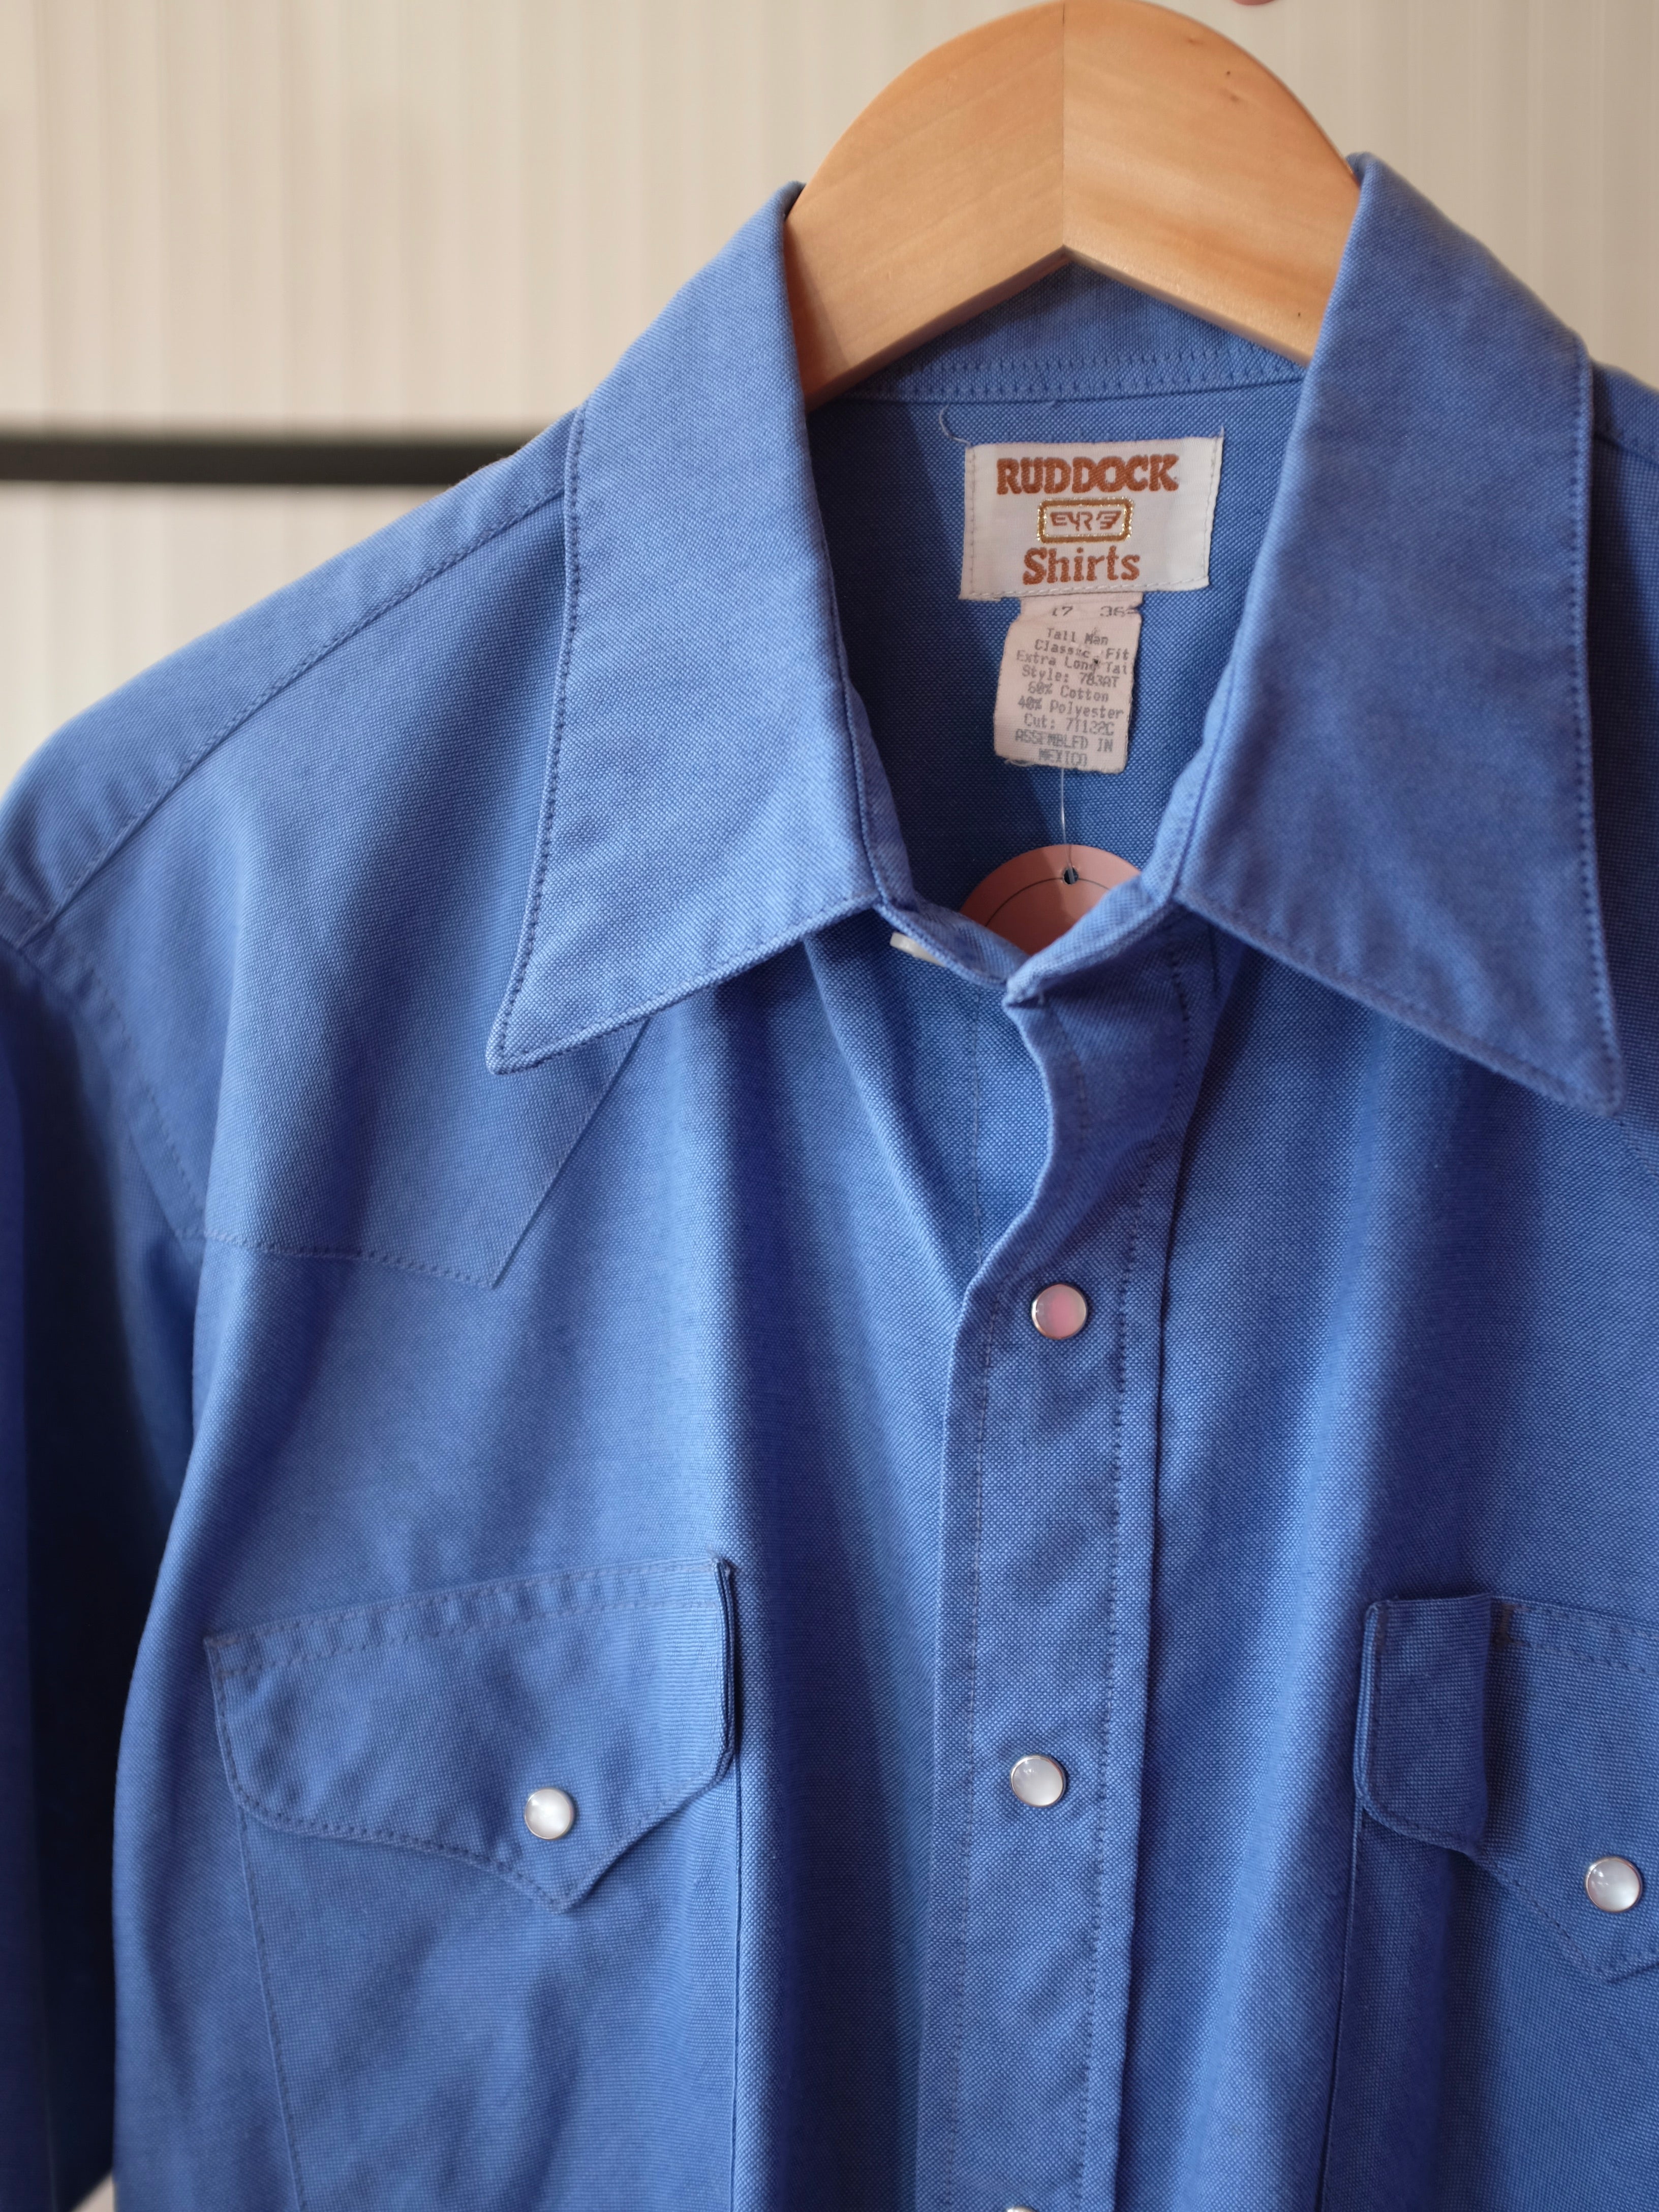 Ruddock Pearlsnap L/S Blue Shirt - Vintage